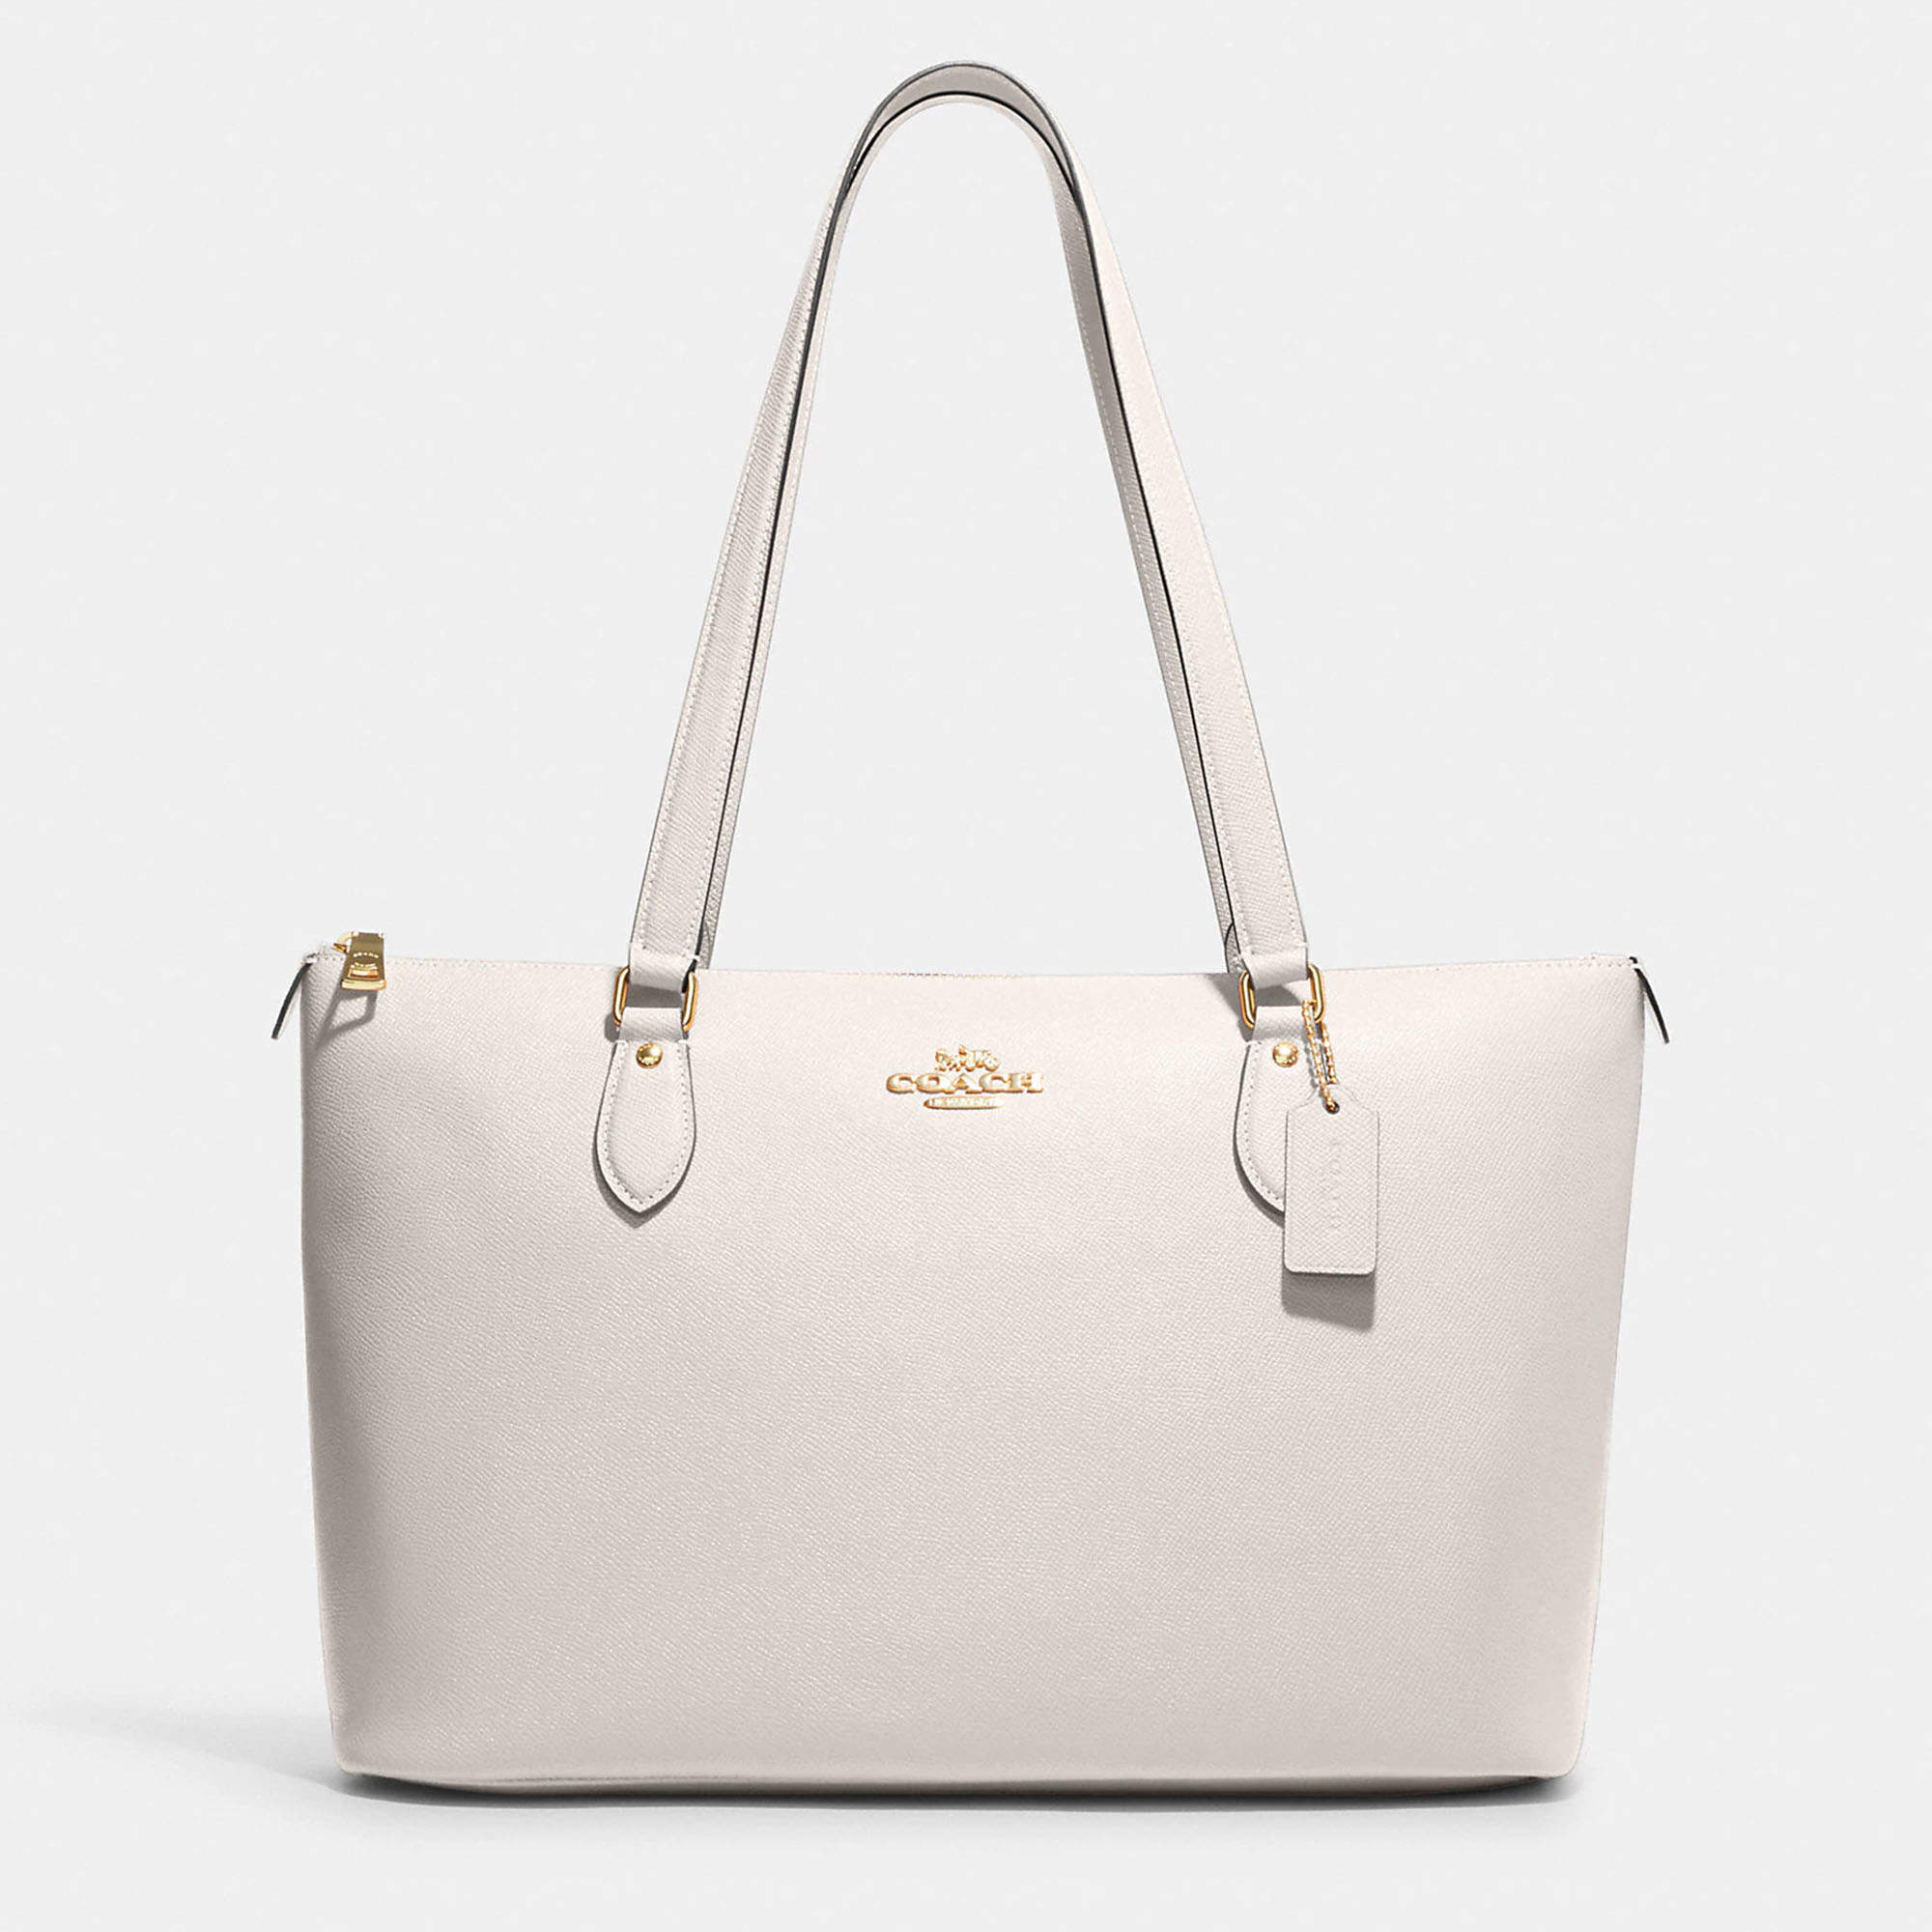 COACH,Dempsey 22 ,2way mini tote handbag,Crossbody bag, new item, Pink White.  | eBay